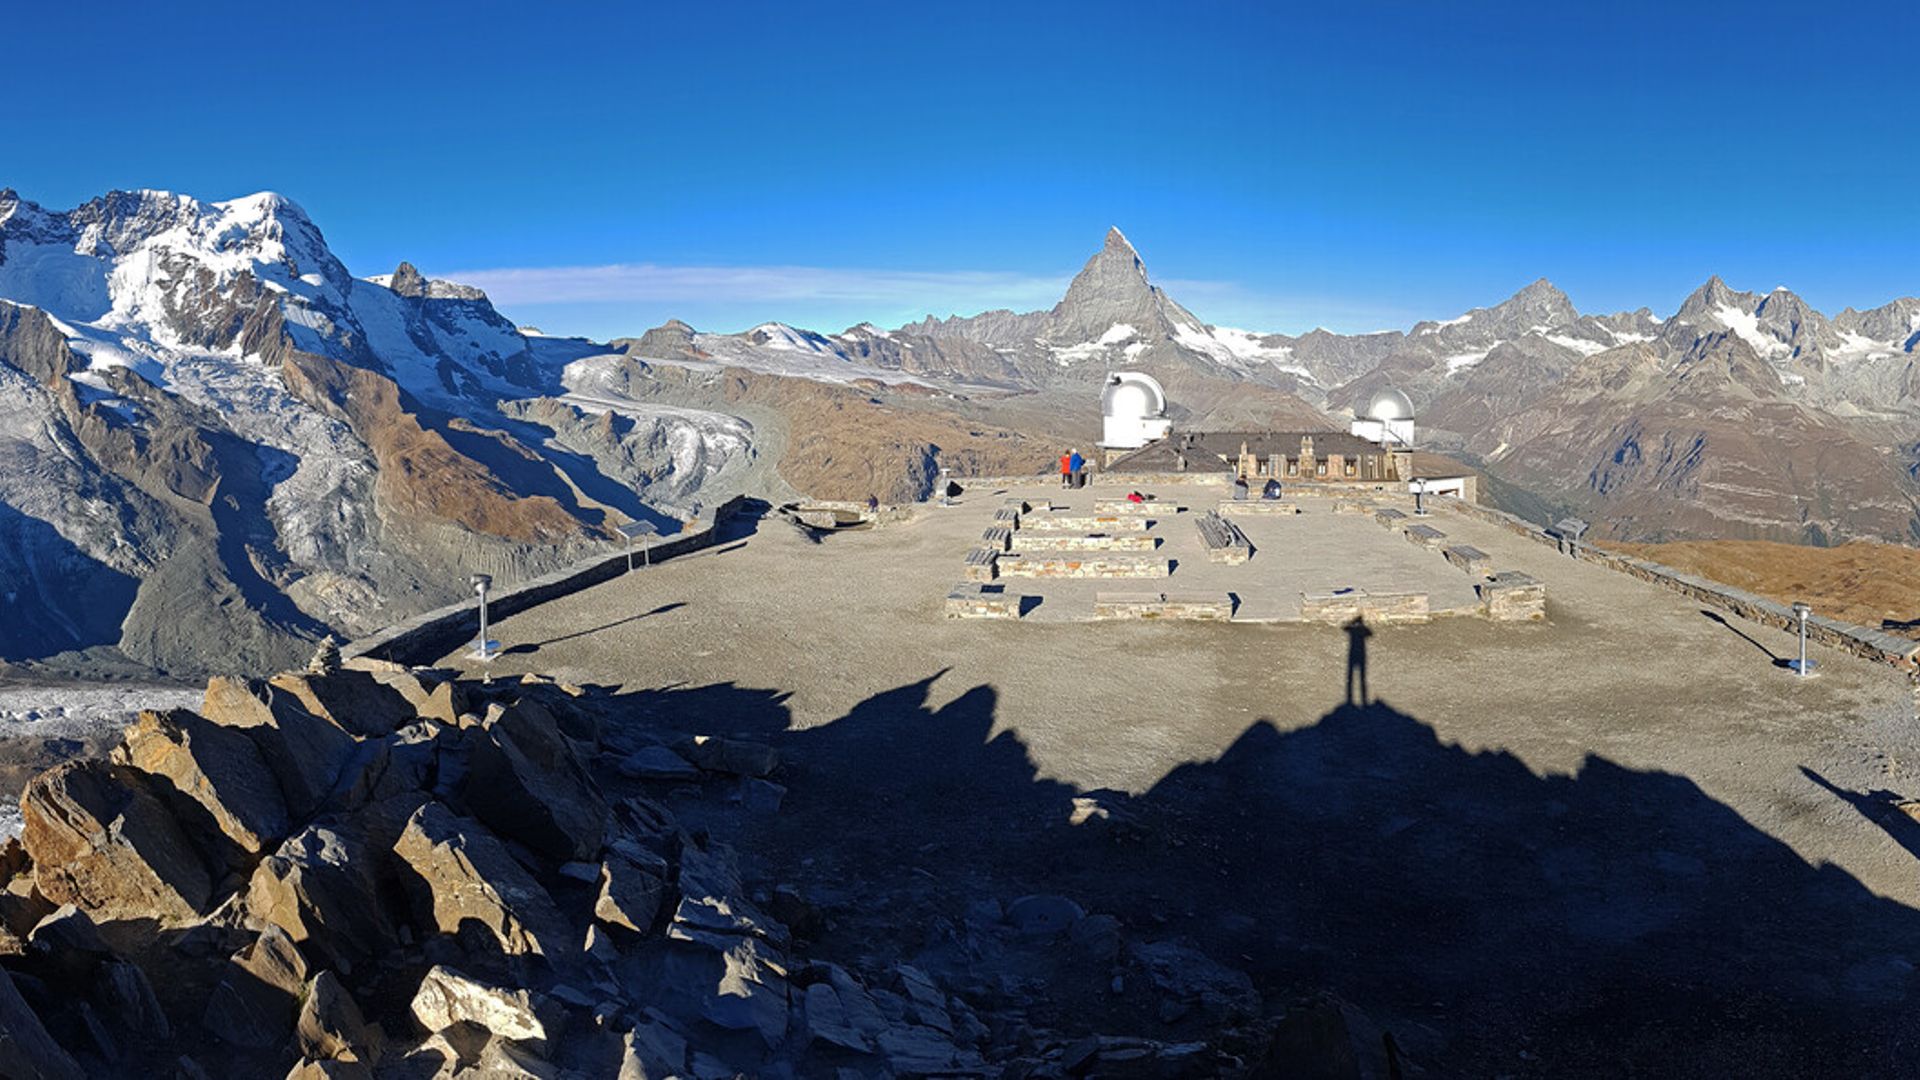 Gornergrat viewing platform: 360 views of 29 four-thousand-metre peaks including the Matterhorn